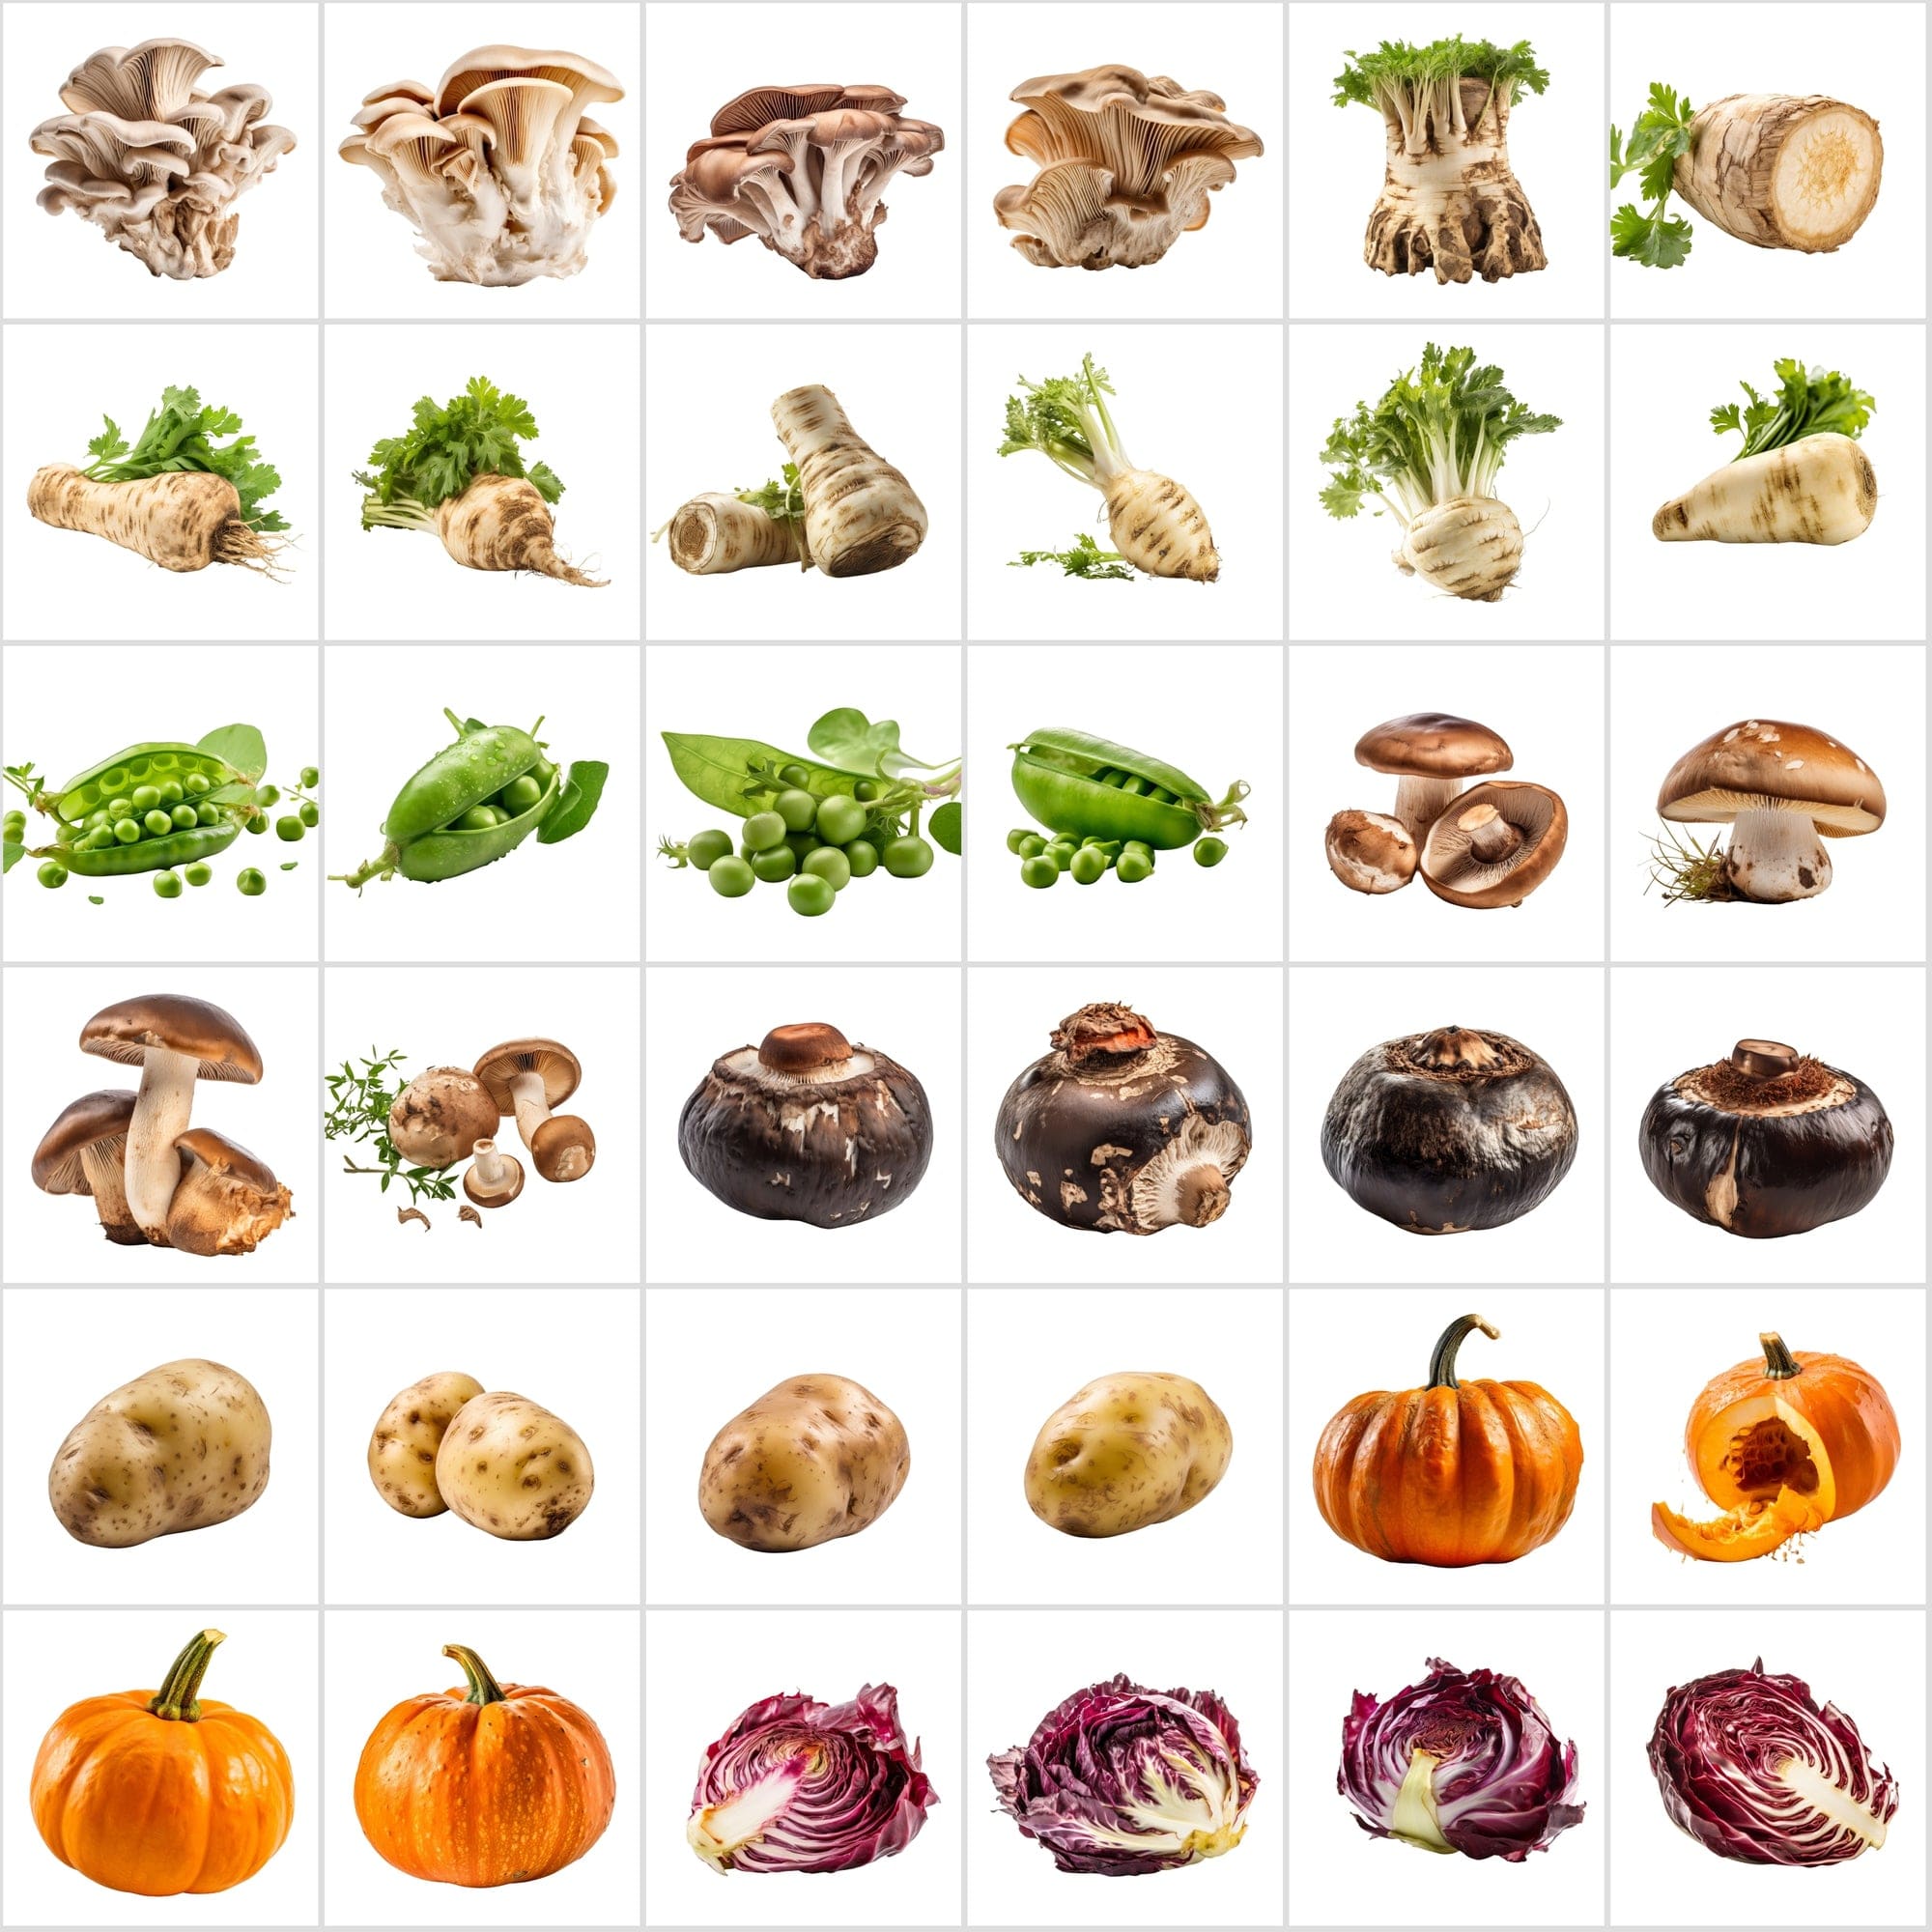 400 Isolated Vegetable Images with Transparent Background Digital Download Sumobundle